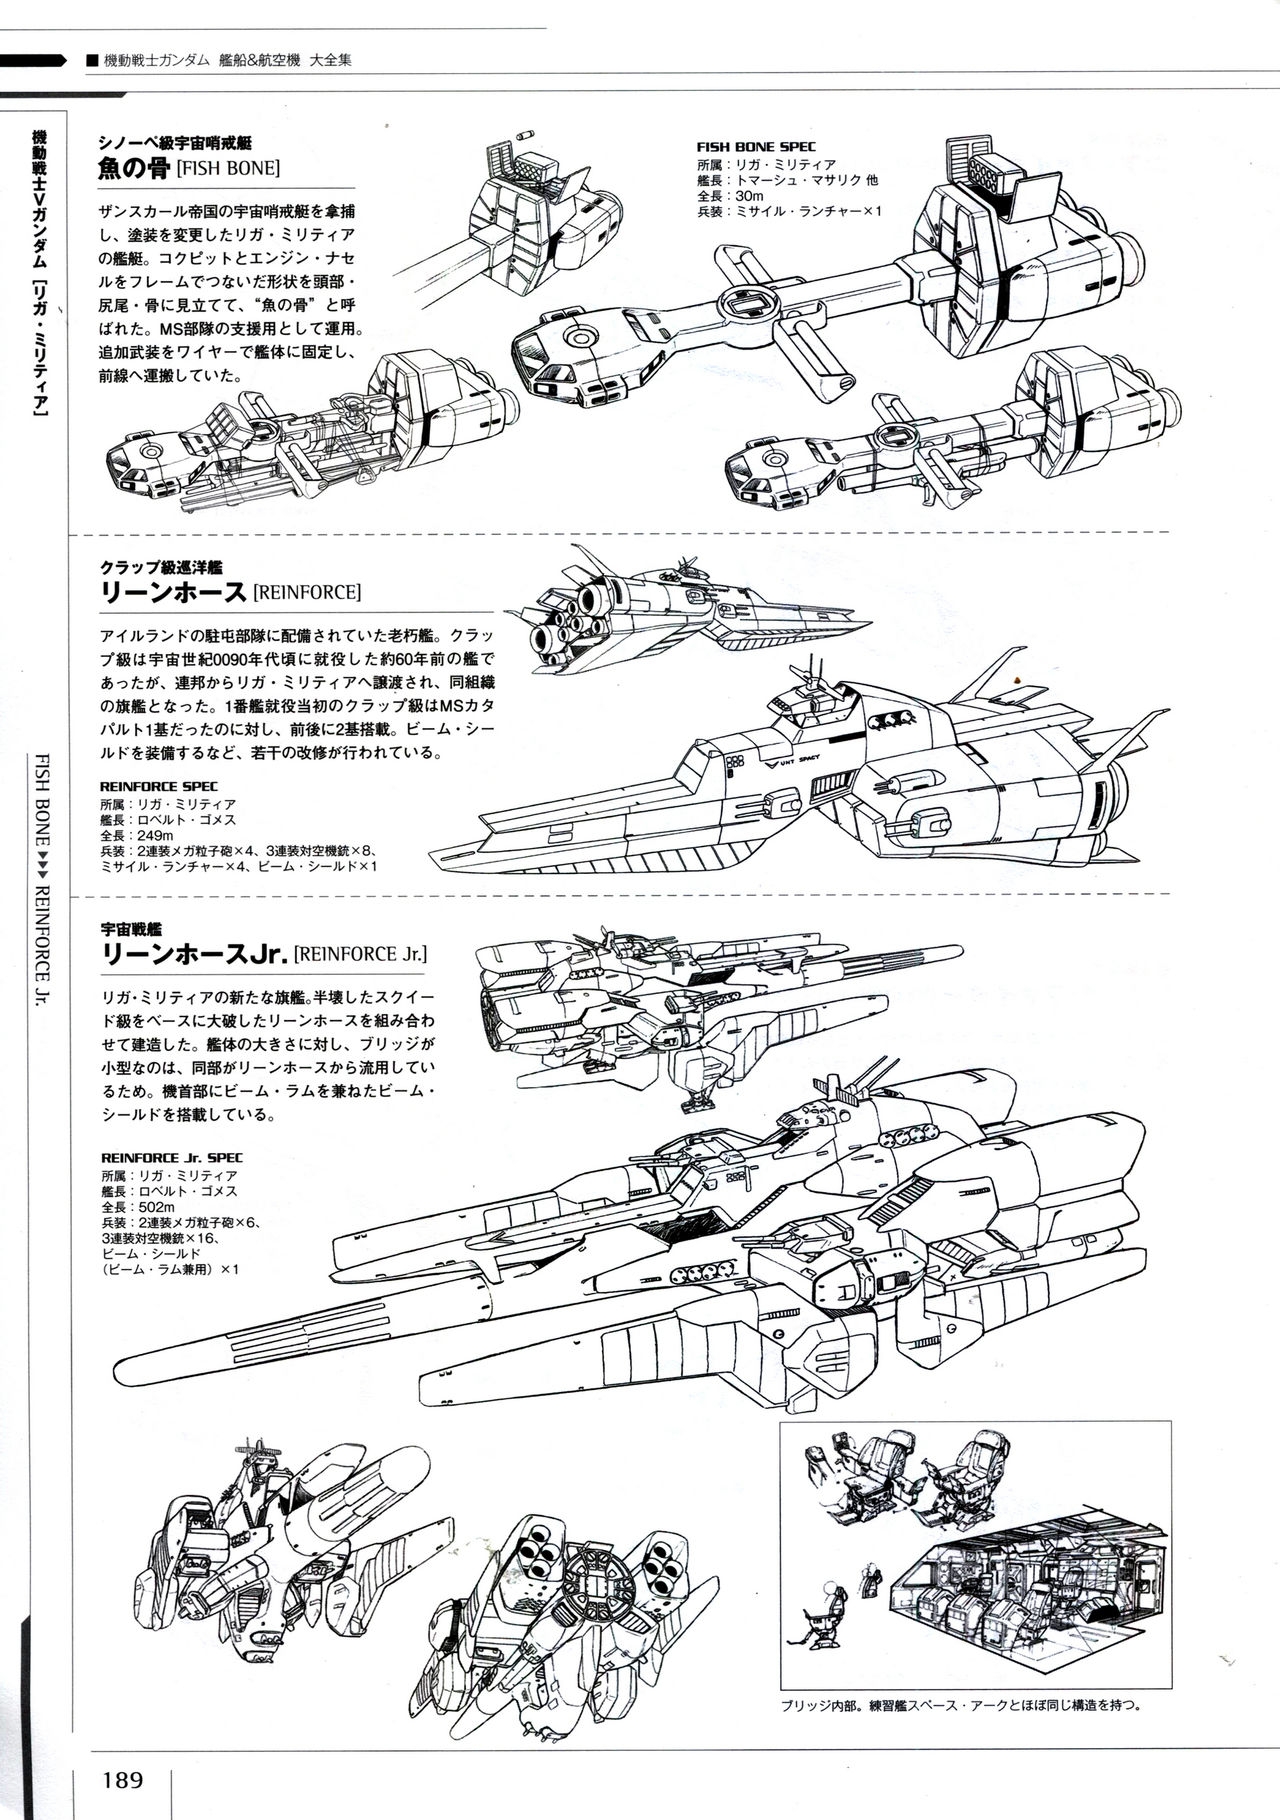 Mobile Suit Gundam - Ship & Aerospace Plane Encyclopedia - Revised Edition 194